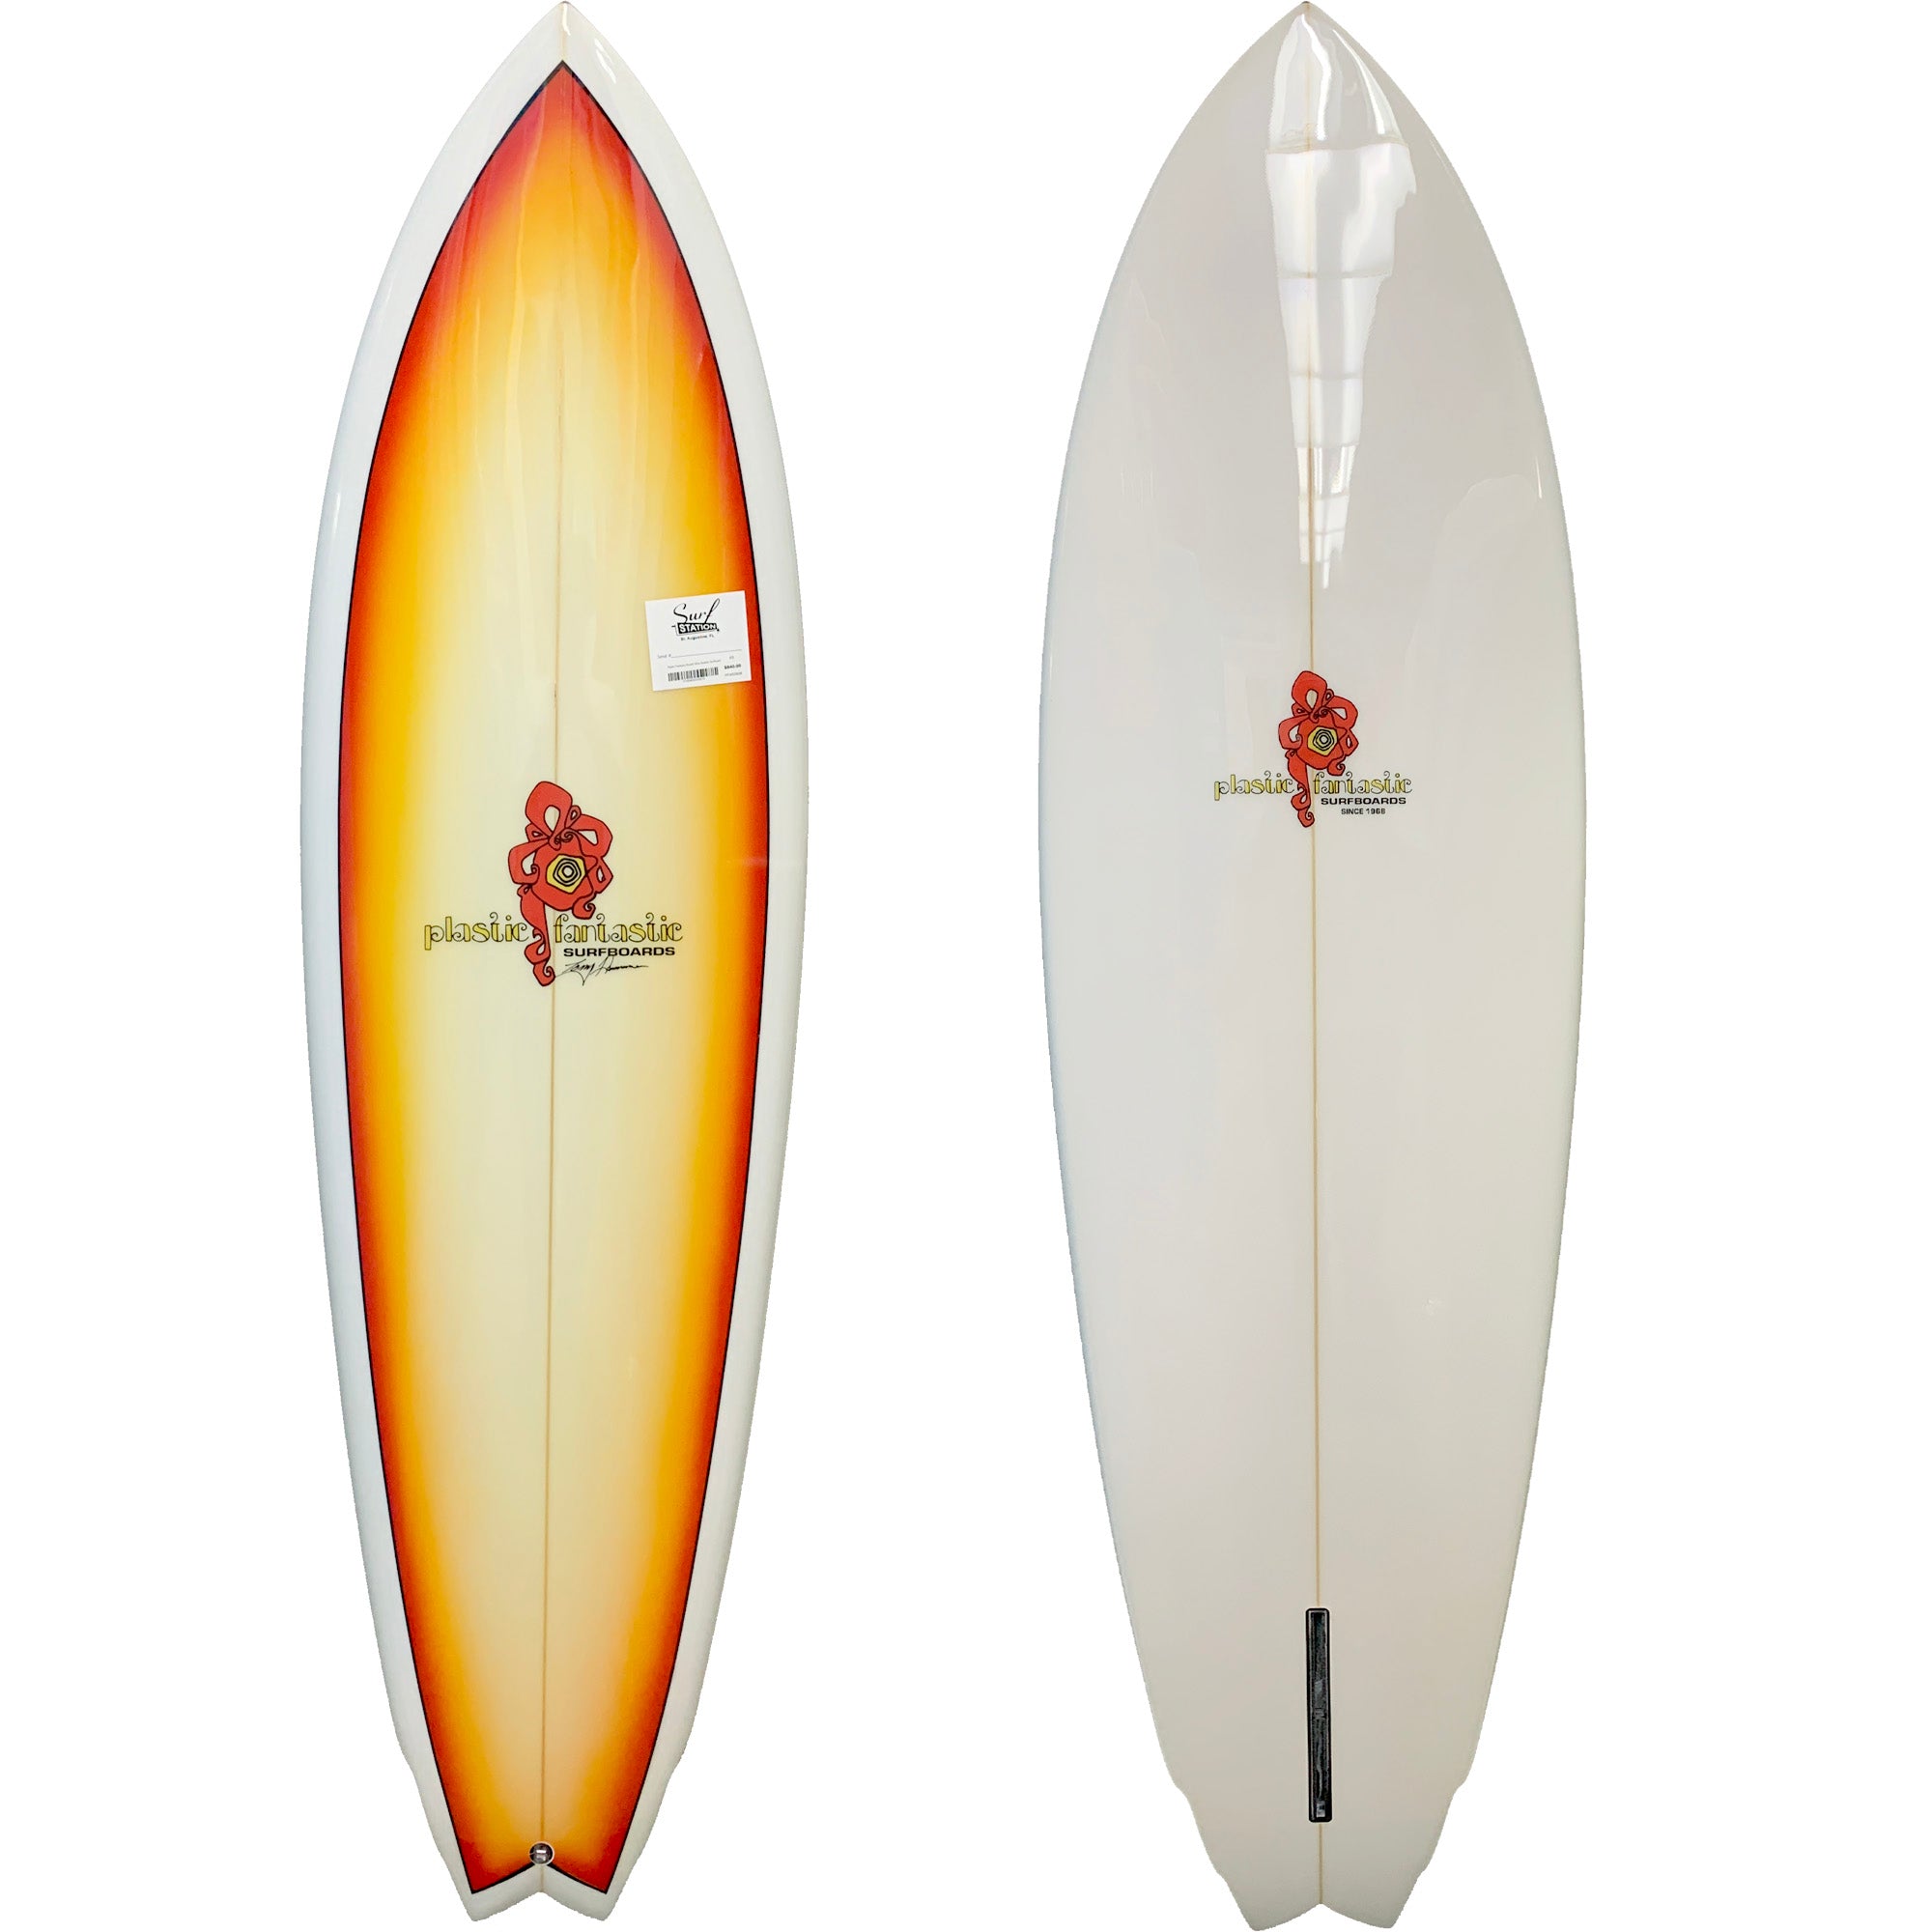 Plastic Fantastic Double Wing Swallow Surfboard